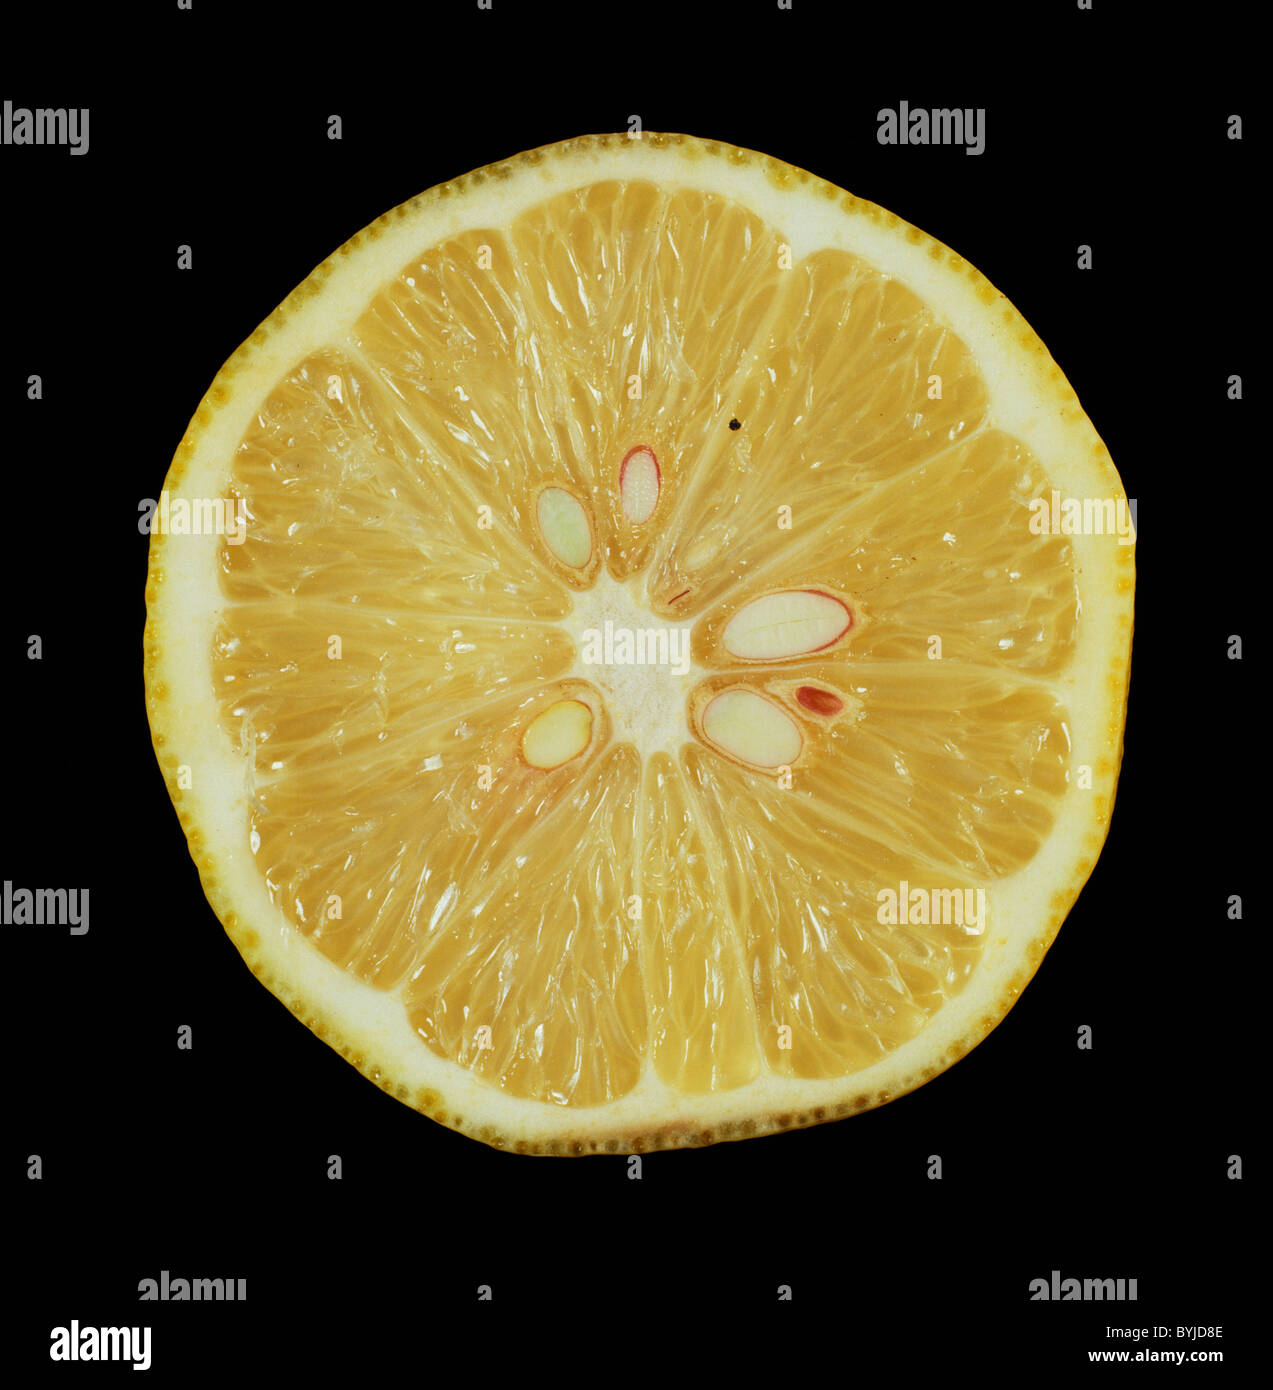 Cut section of a citrus fruit lemon variety Interdonata Stock Photo